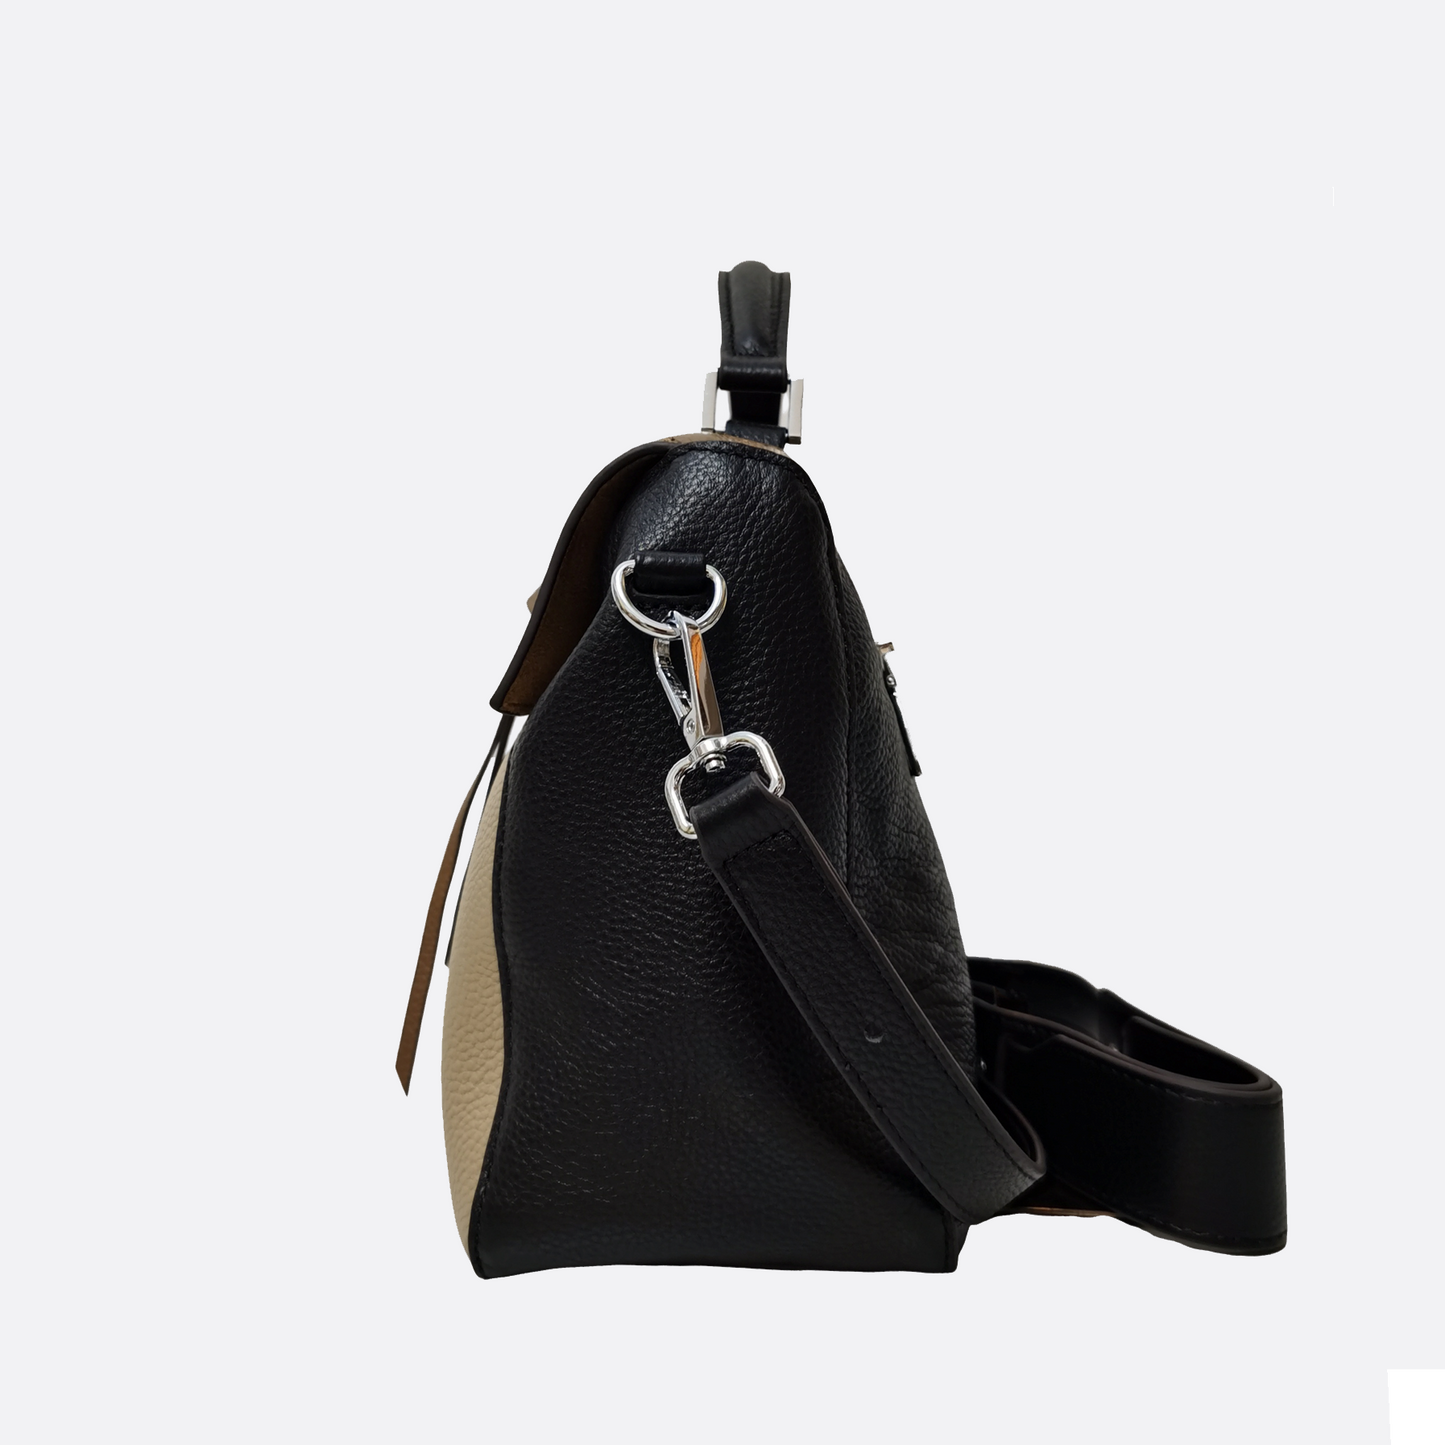 Women's genuine cowhide leather handbag Trika V3 design